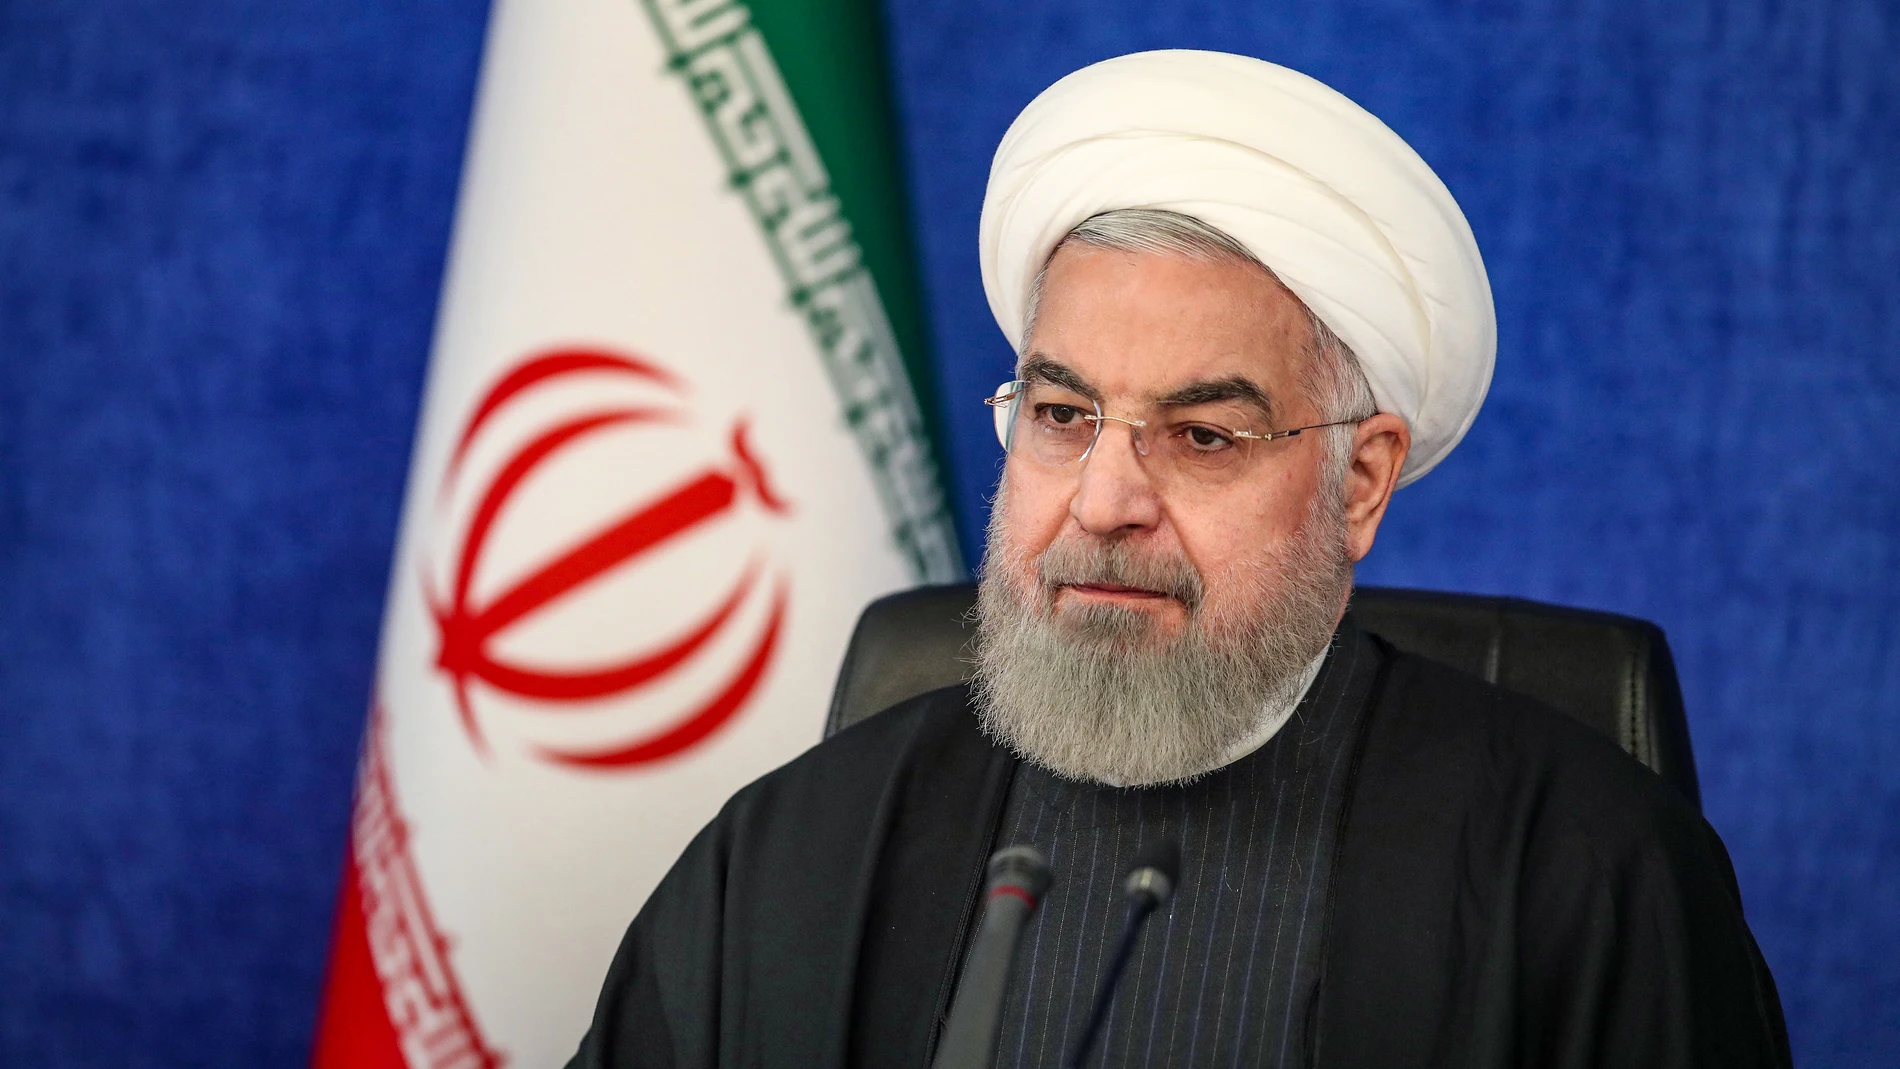 El presidente iraní Hasán Rohaní